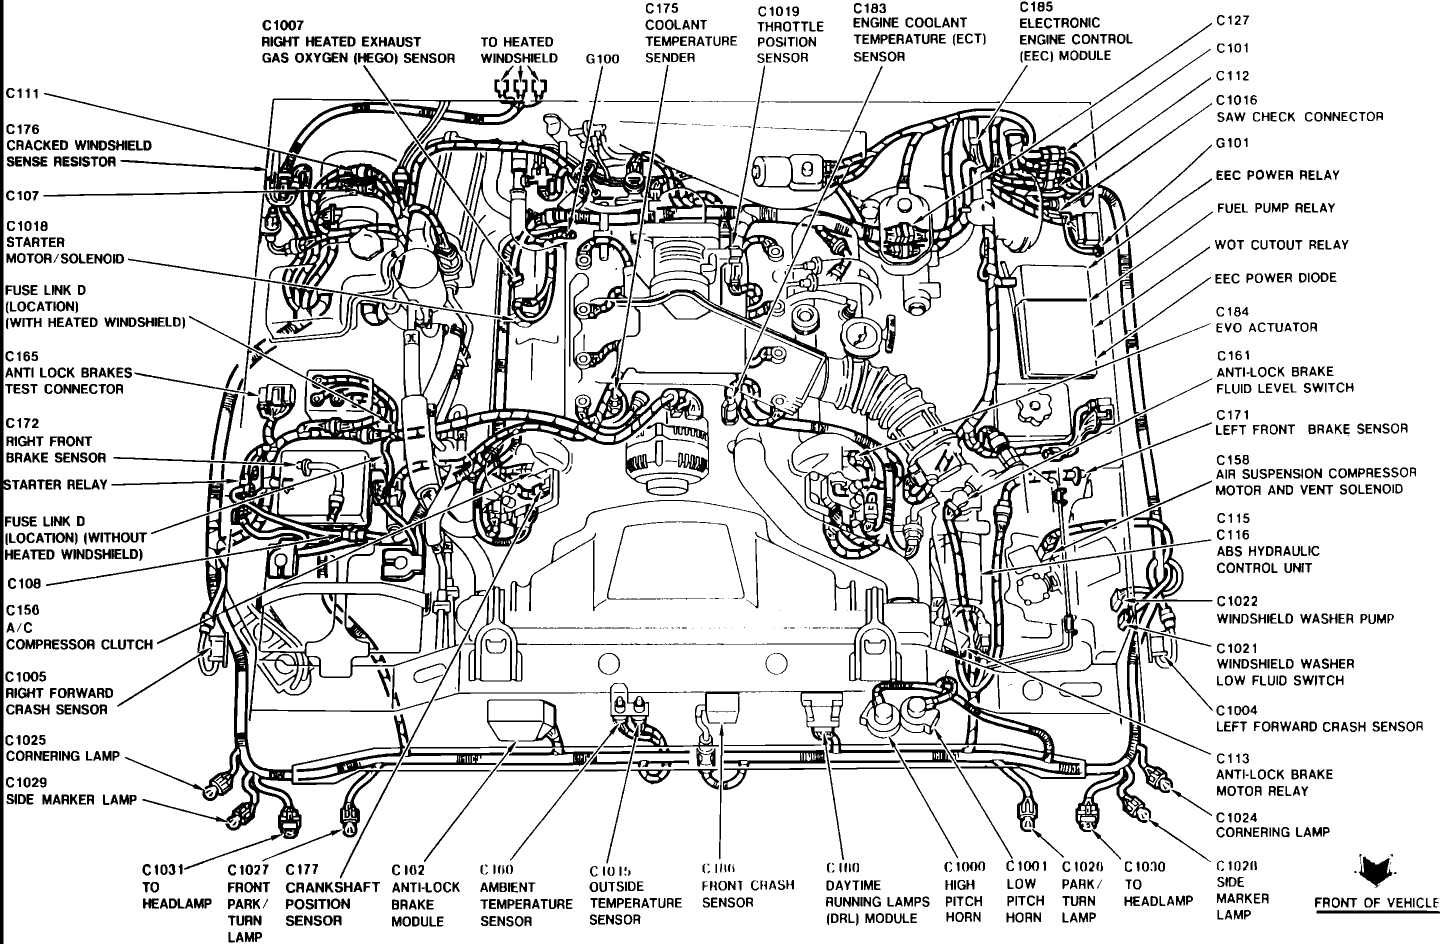 1991 lincoln jbl wiring diagram